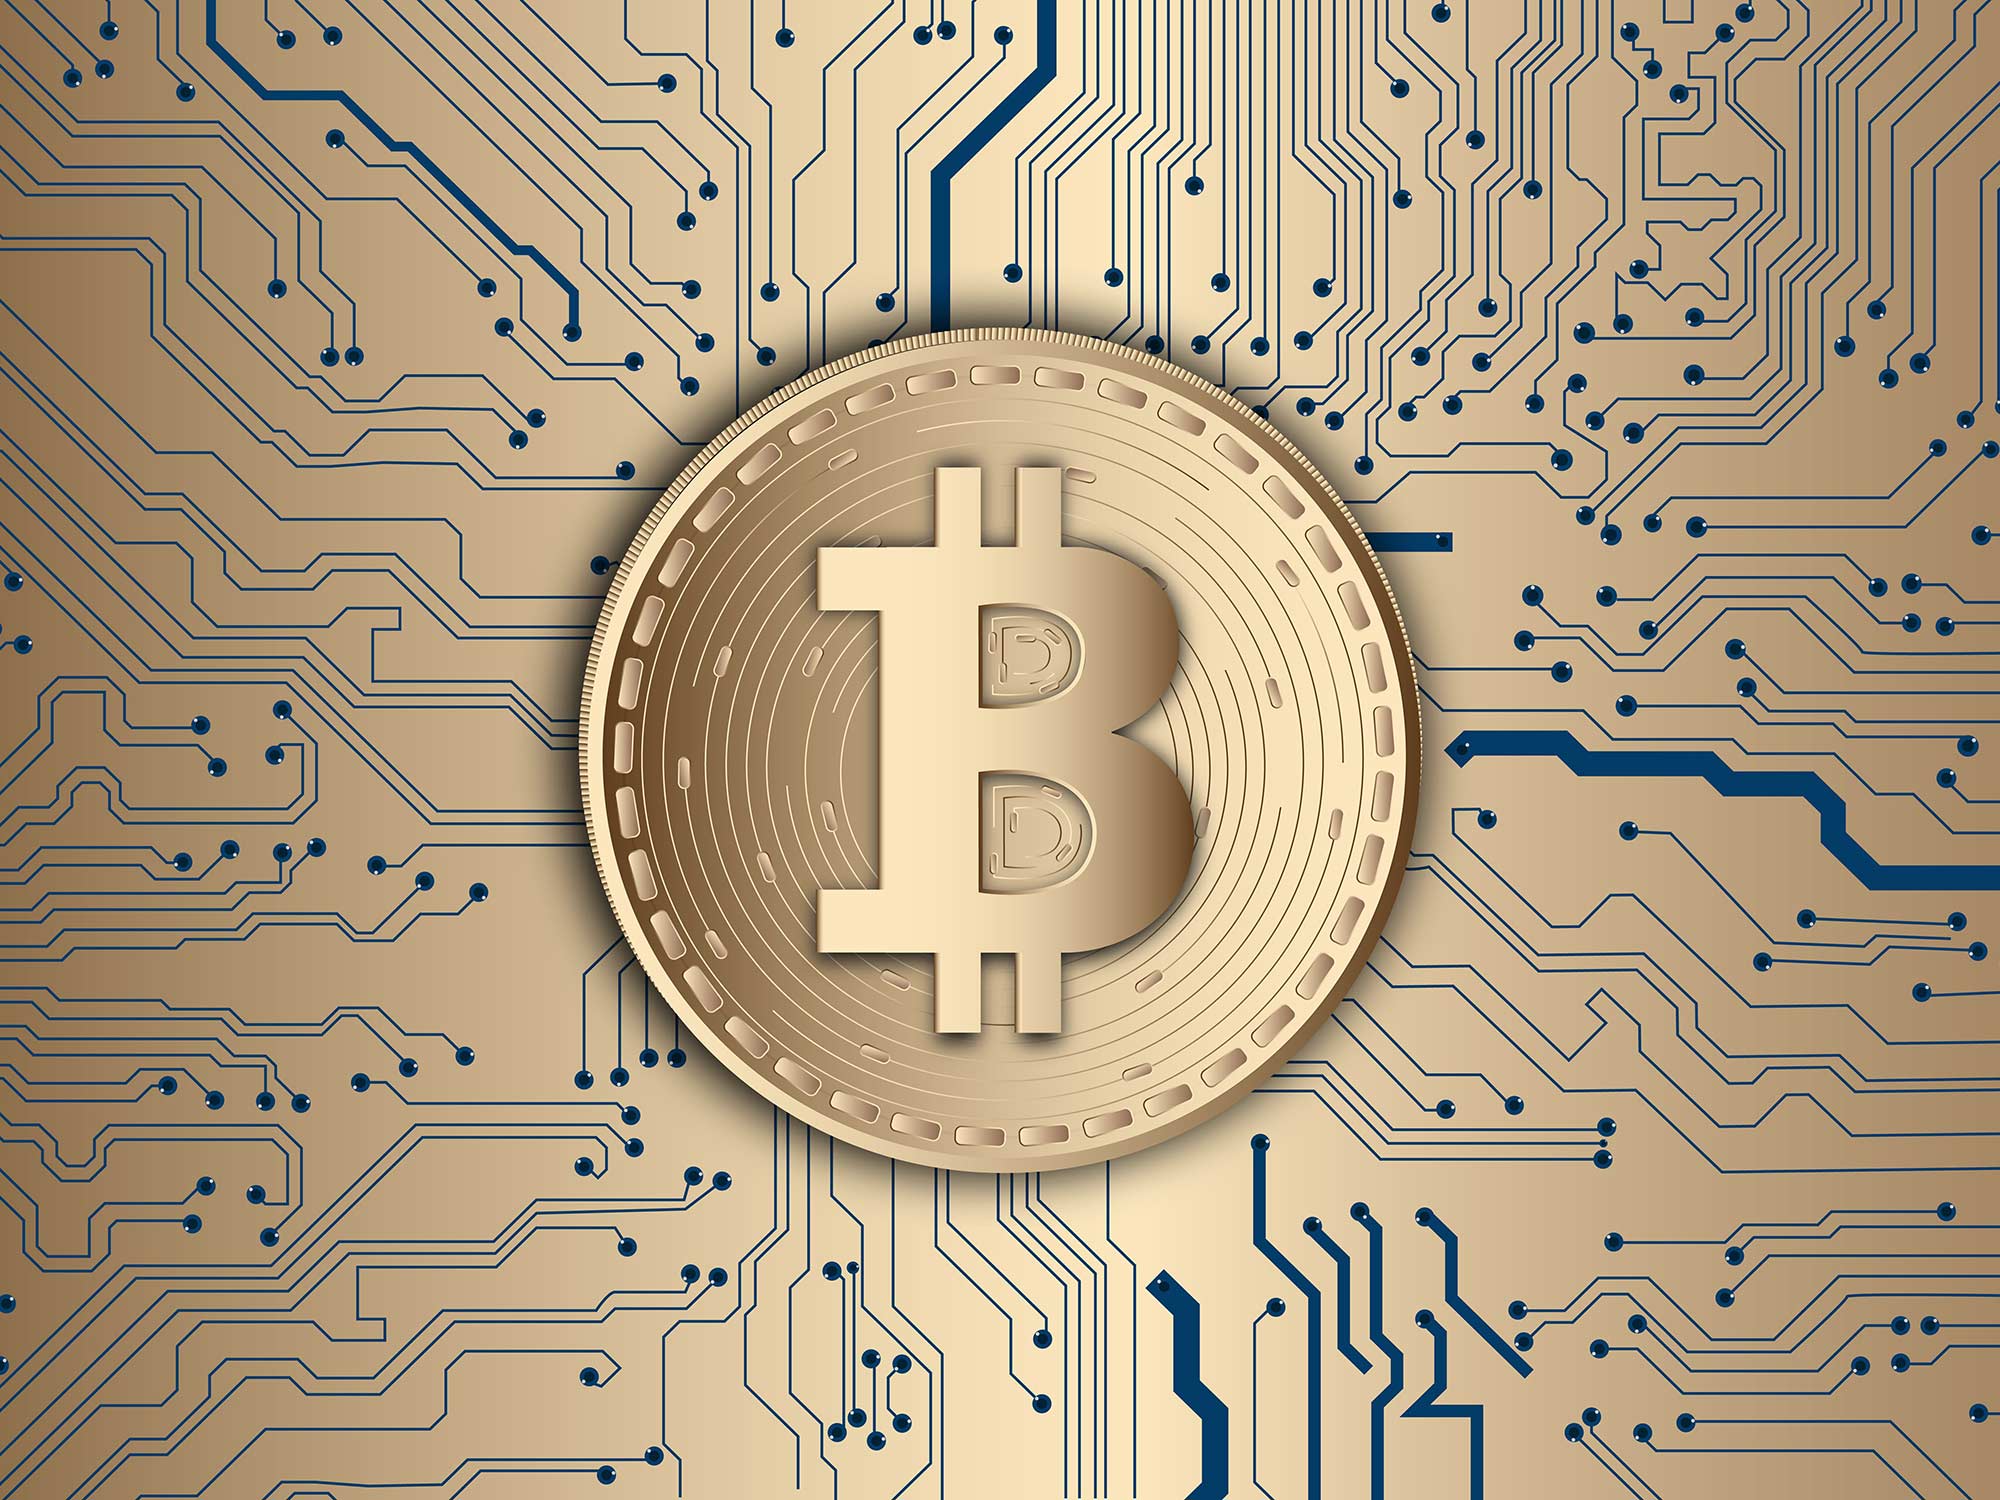 Bitcoin definition - crypt currency - blockchain - 1st blockchain